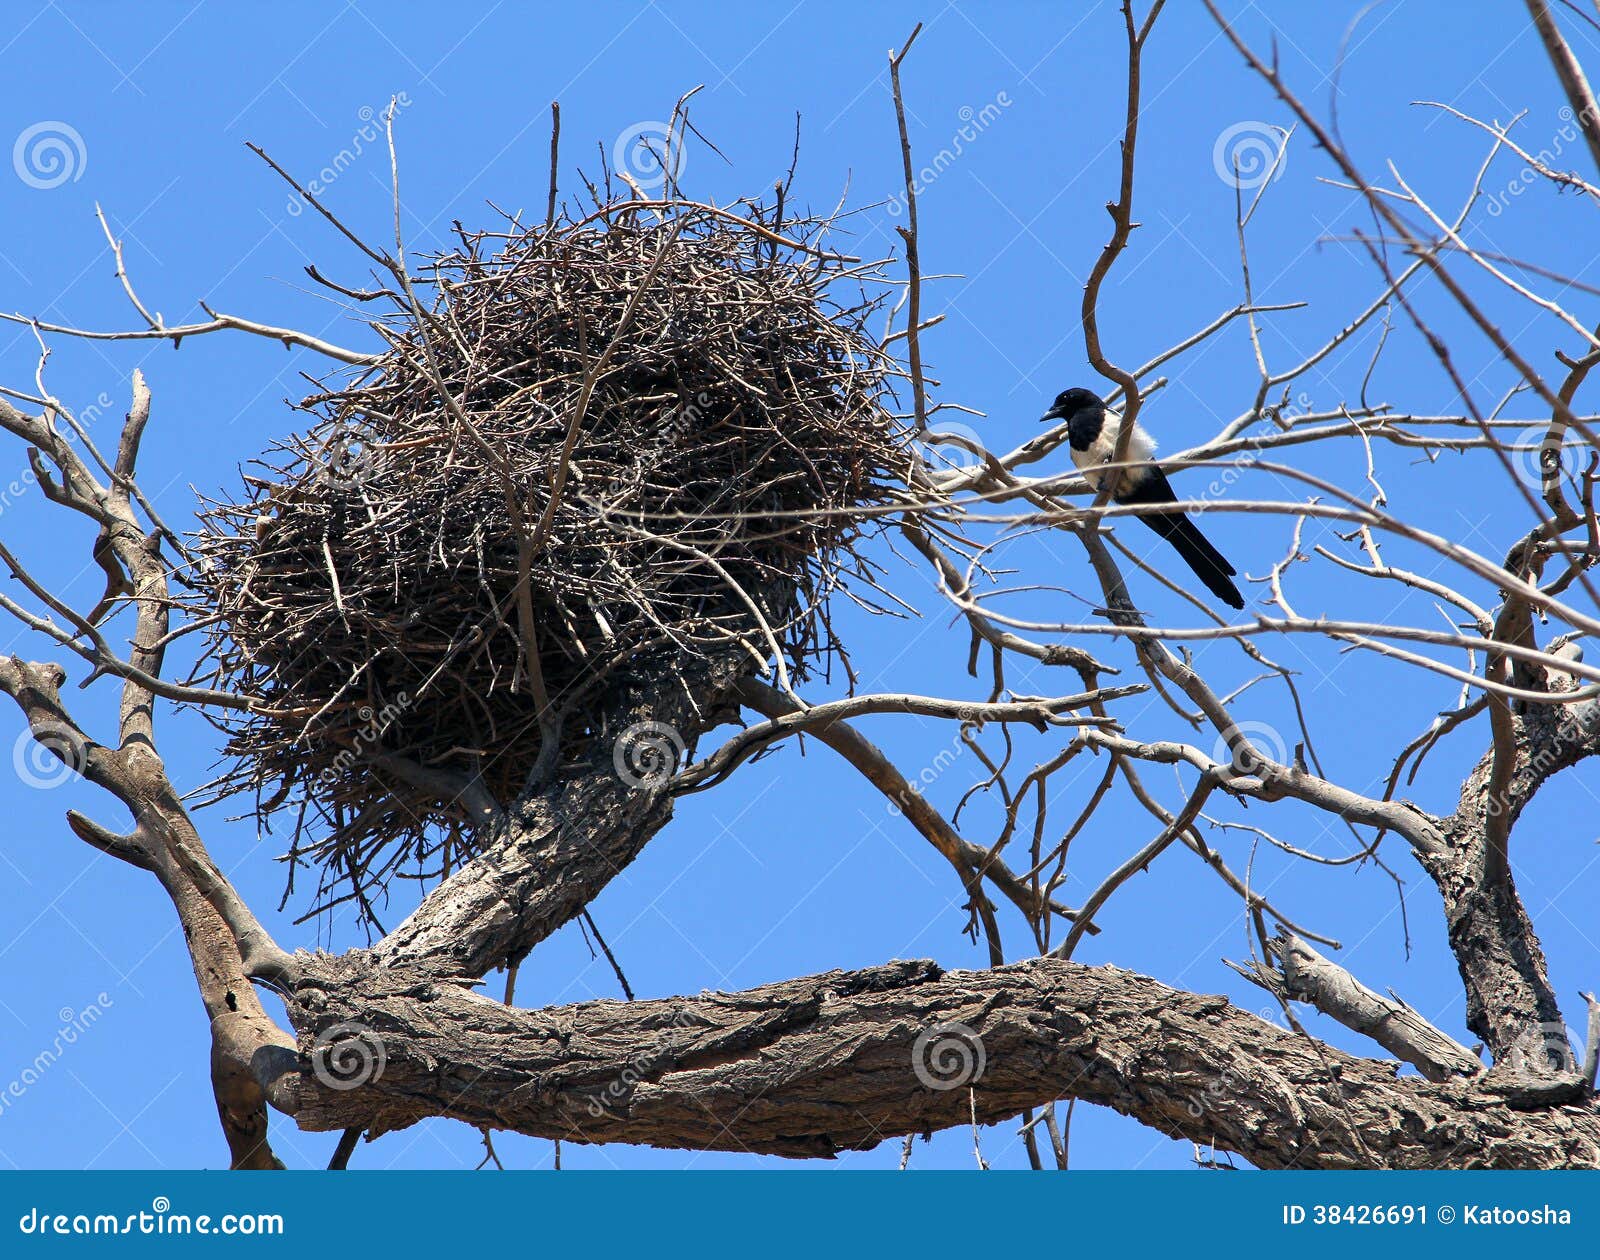 common magpie near nest